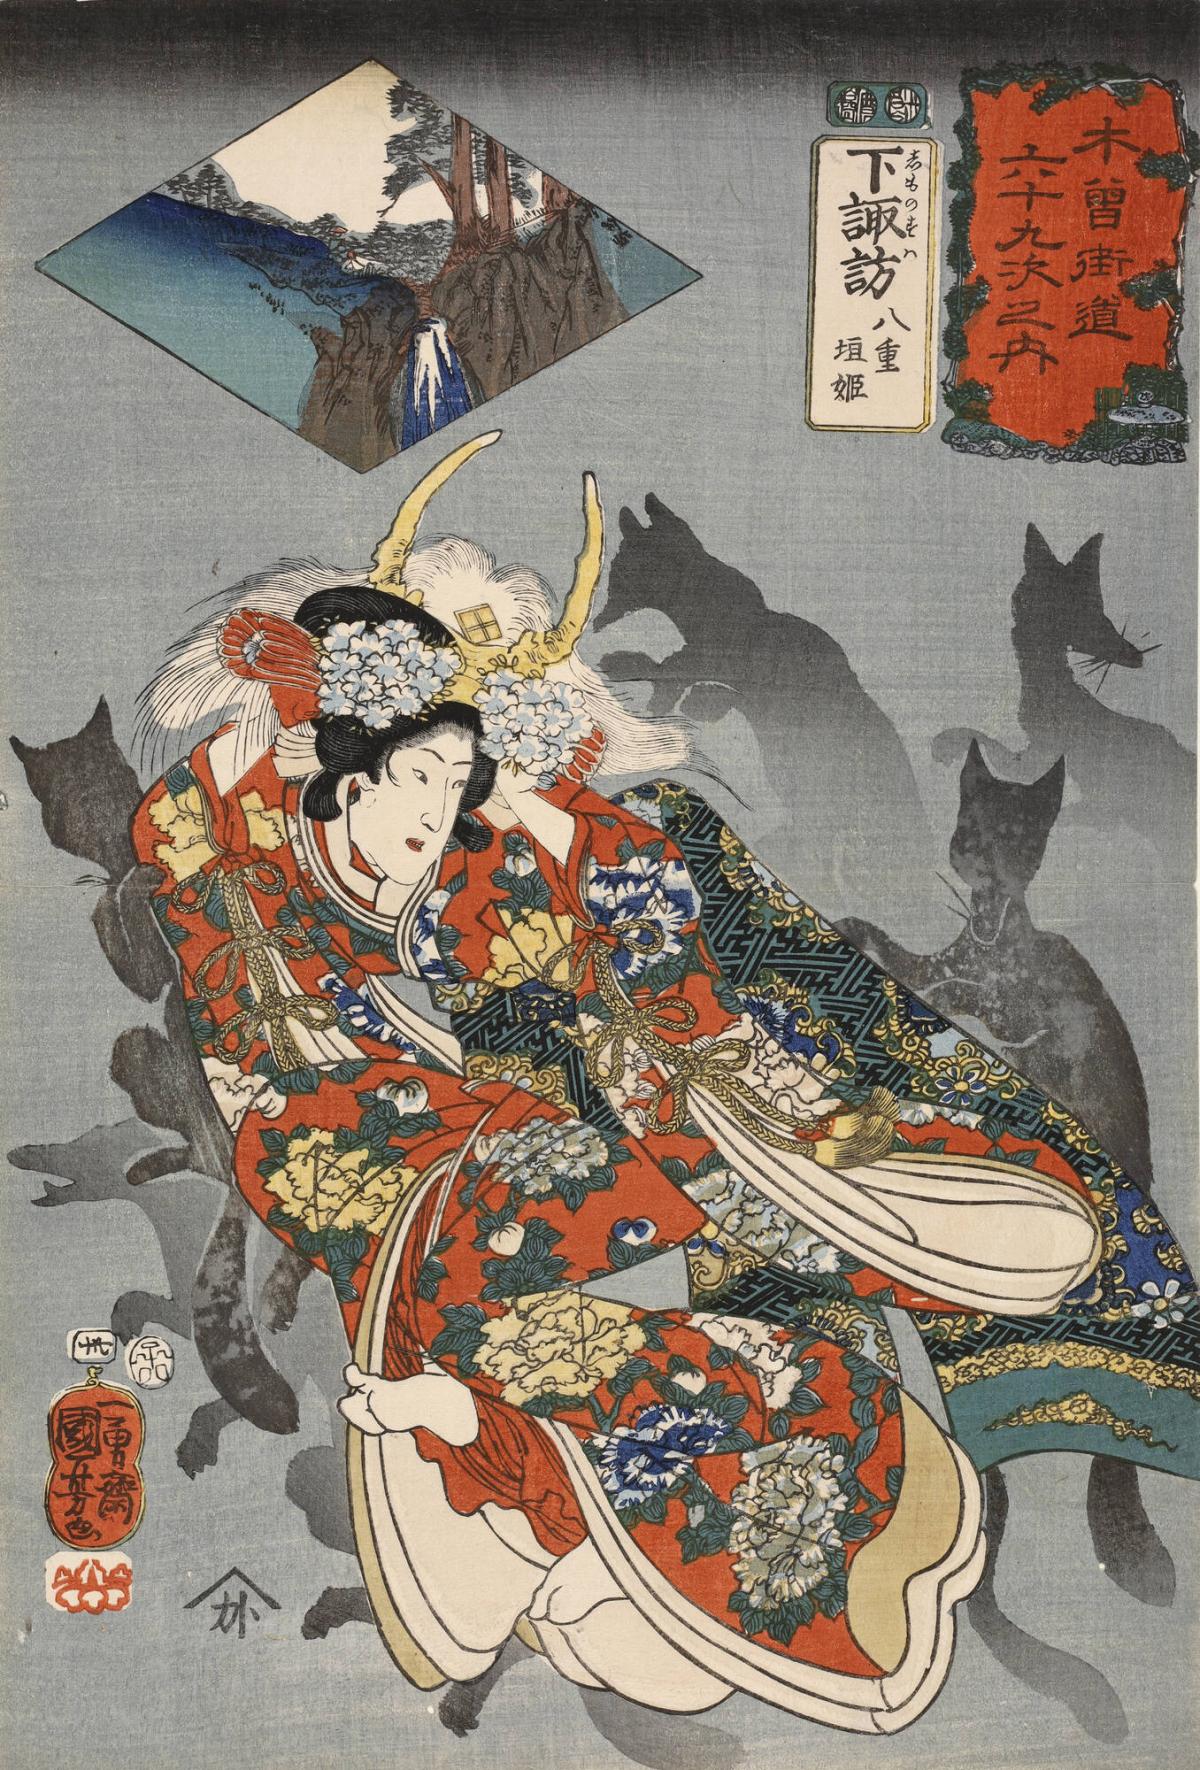 Shimonosuwa: Princess Yaegaki and the Fox Spirits, no. 30 from the series The Sixty-nine Stations of the Kisokaidō